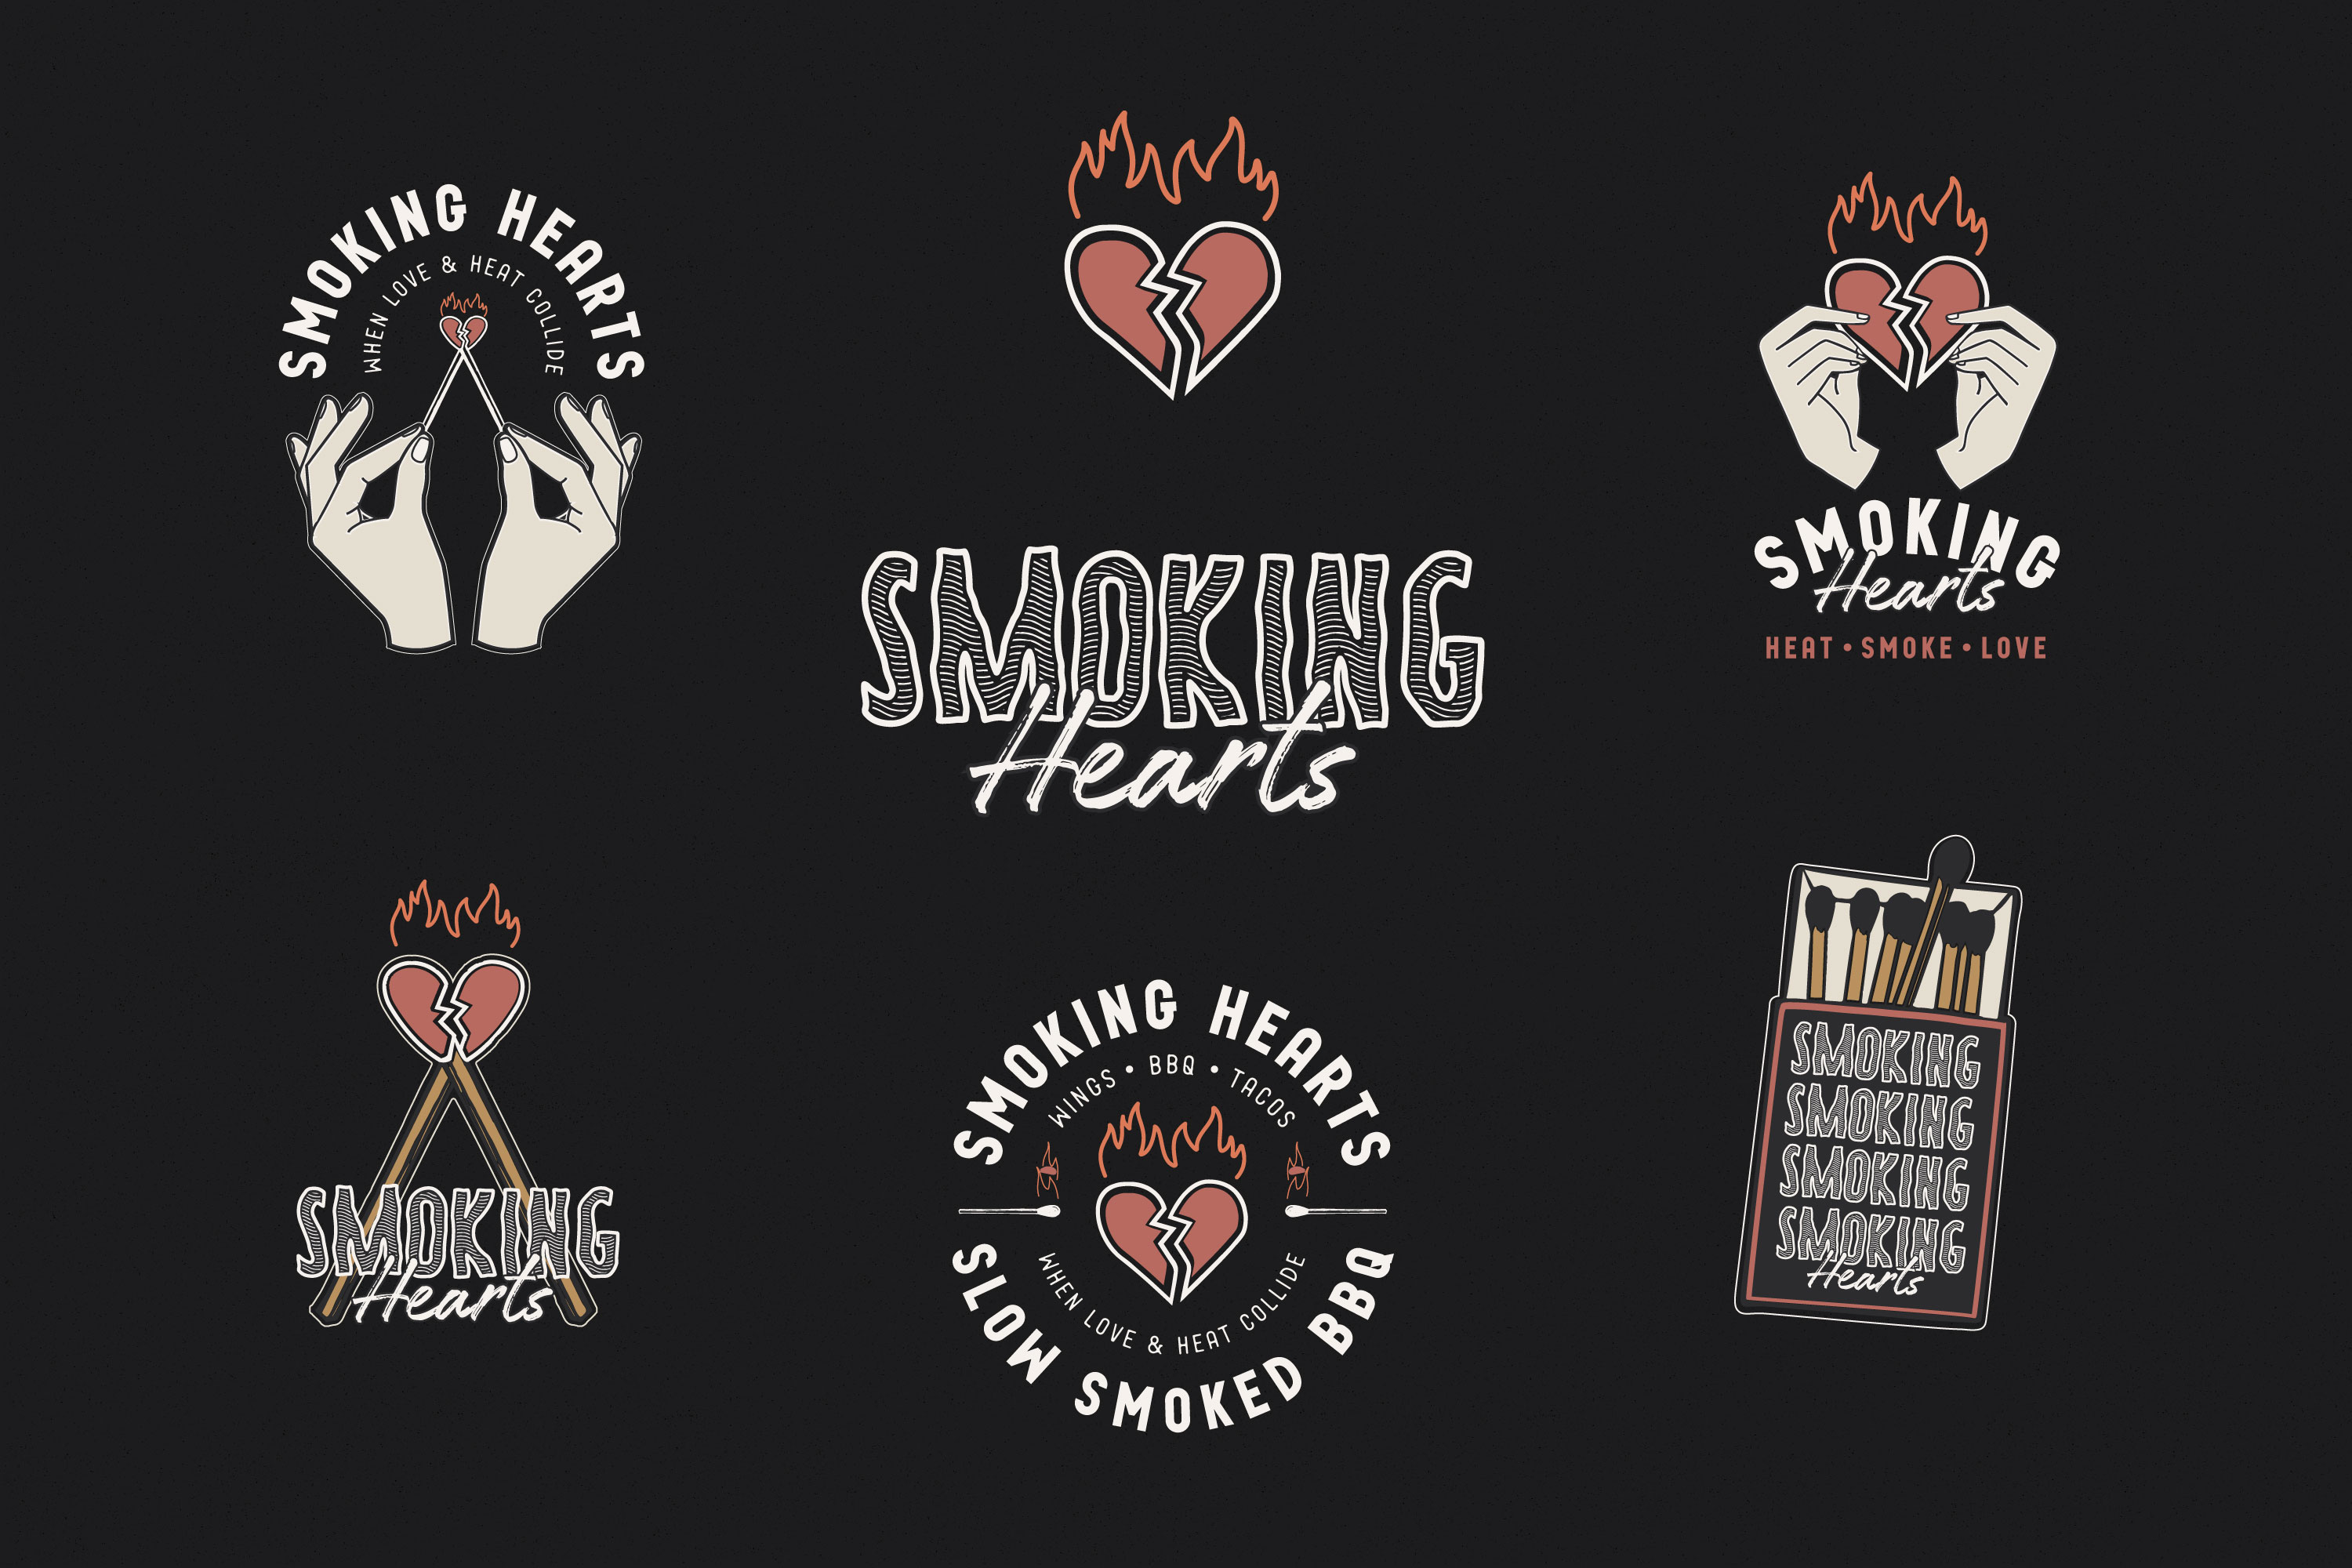 Studio Nice One Create Visual Identity for Smoking Hearts BBQ & Smokehouse